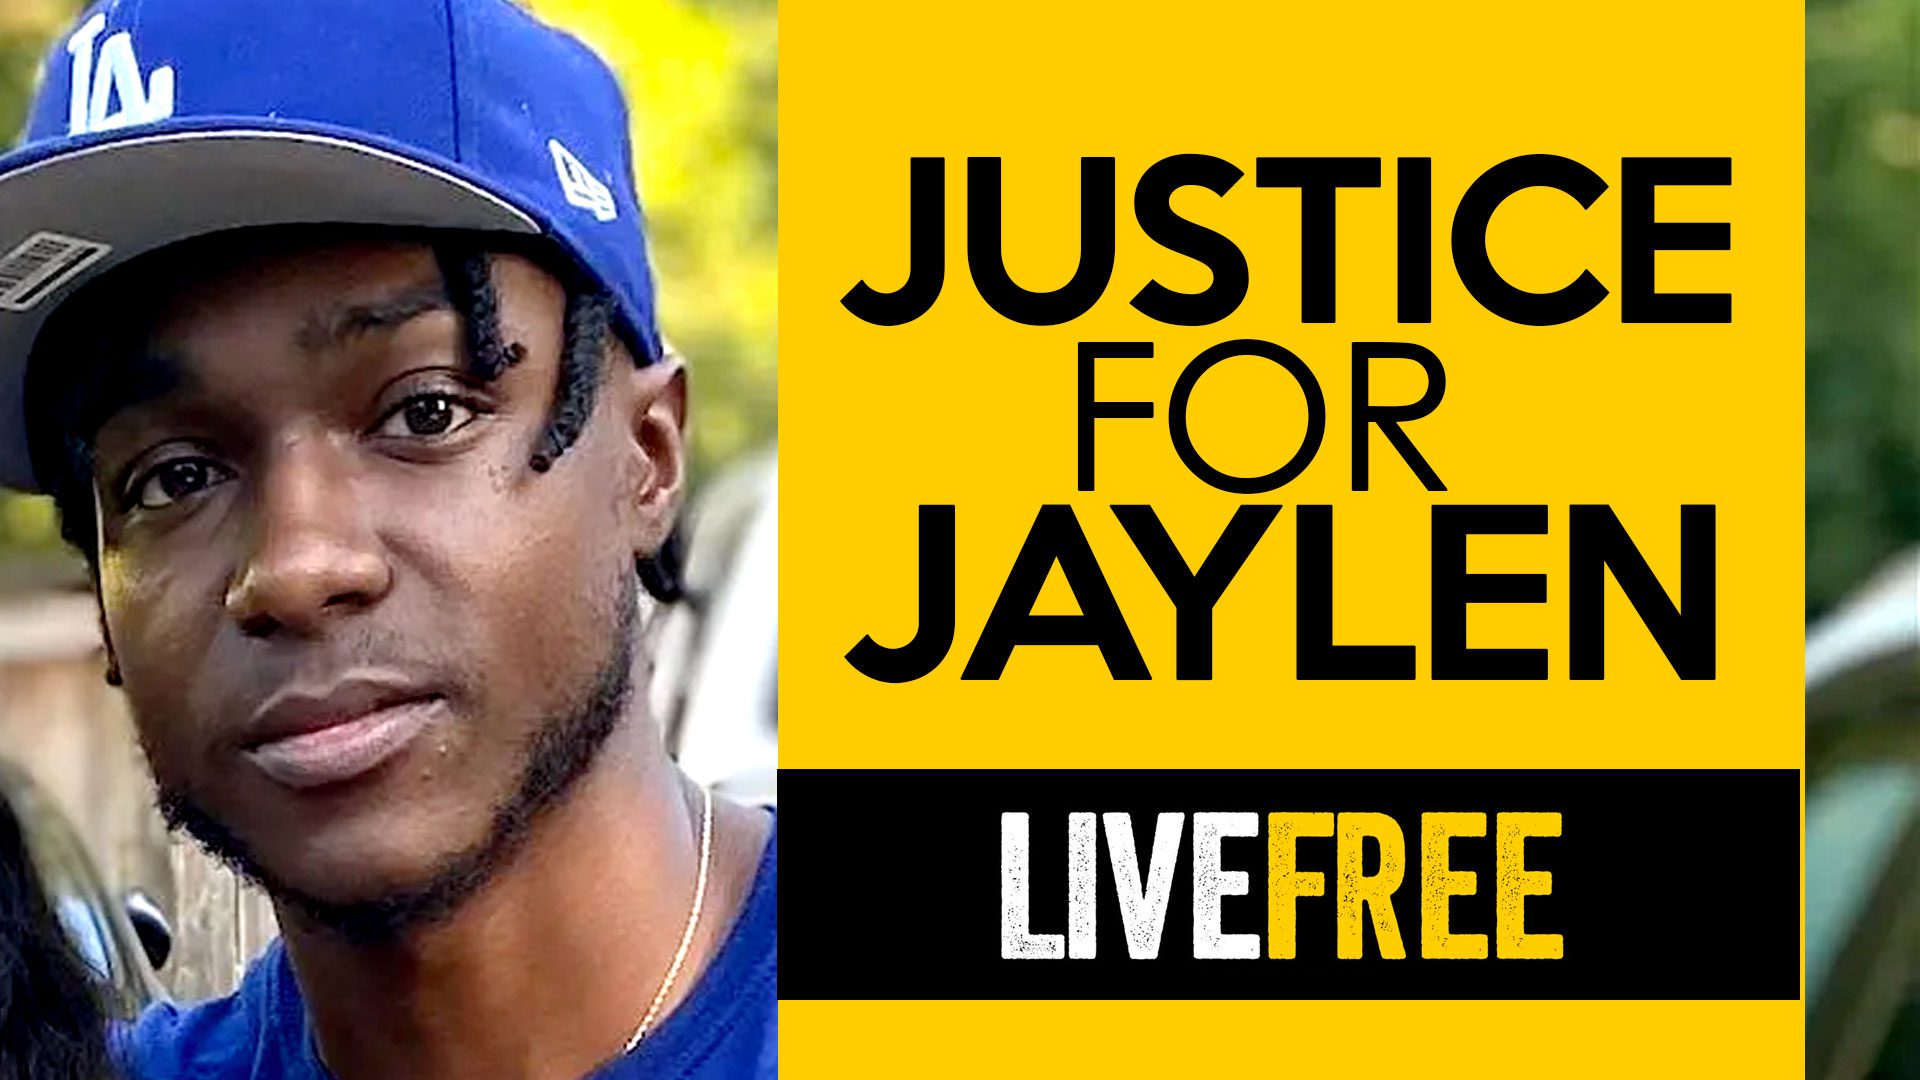 Jaylen lewis was shot by Mississippi Capital Police